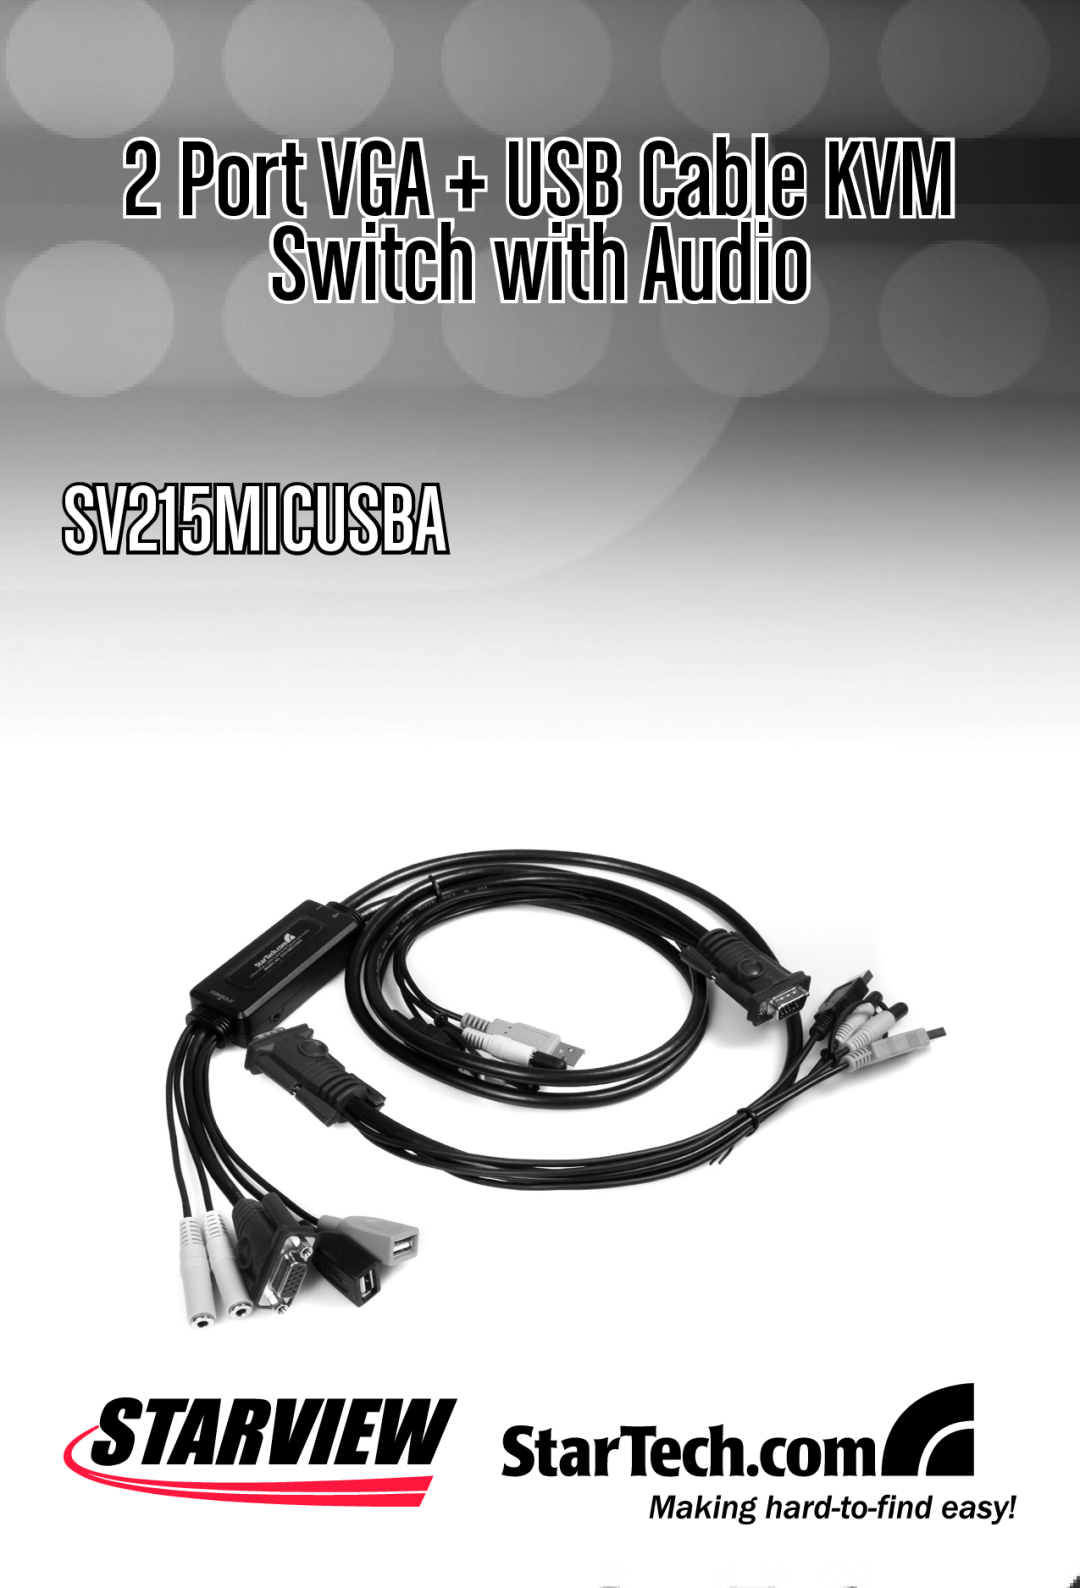 StarTech.com SV215MICUSBA manual Switch with Audio, Port VGA + USB Cable KVM 